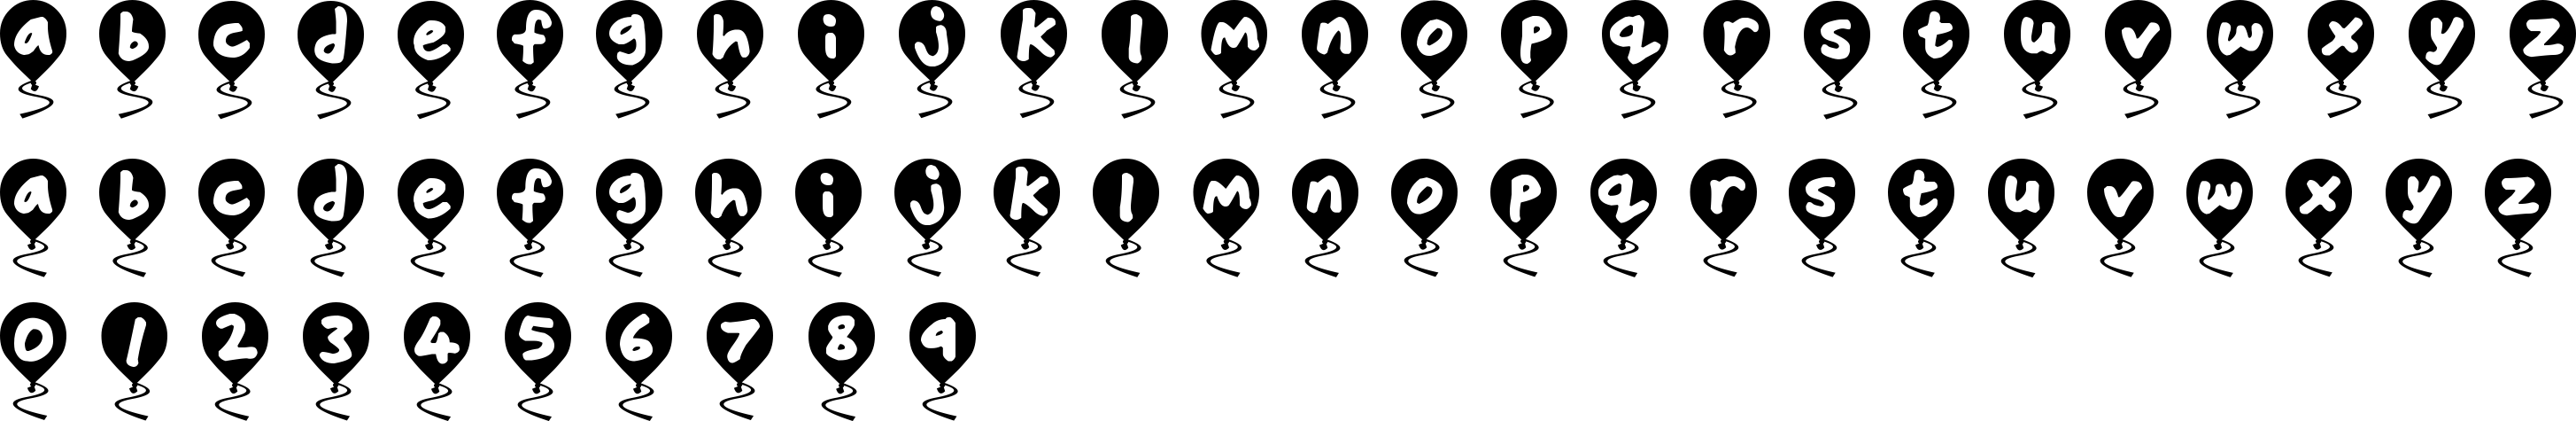 Balloon Floats Font Character Map